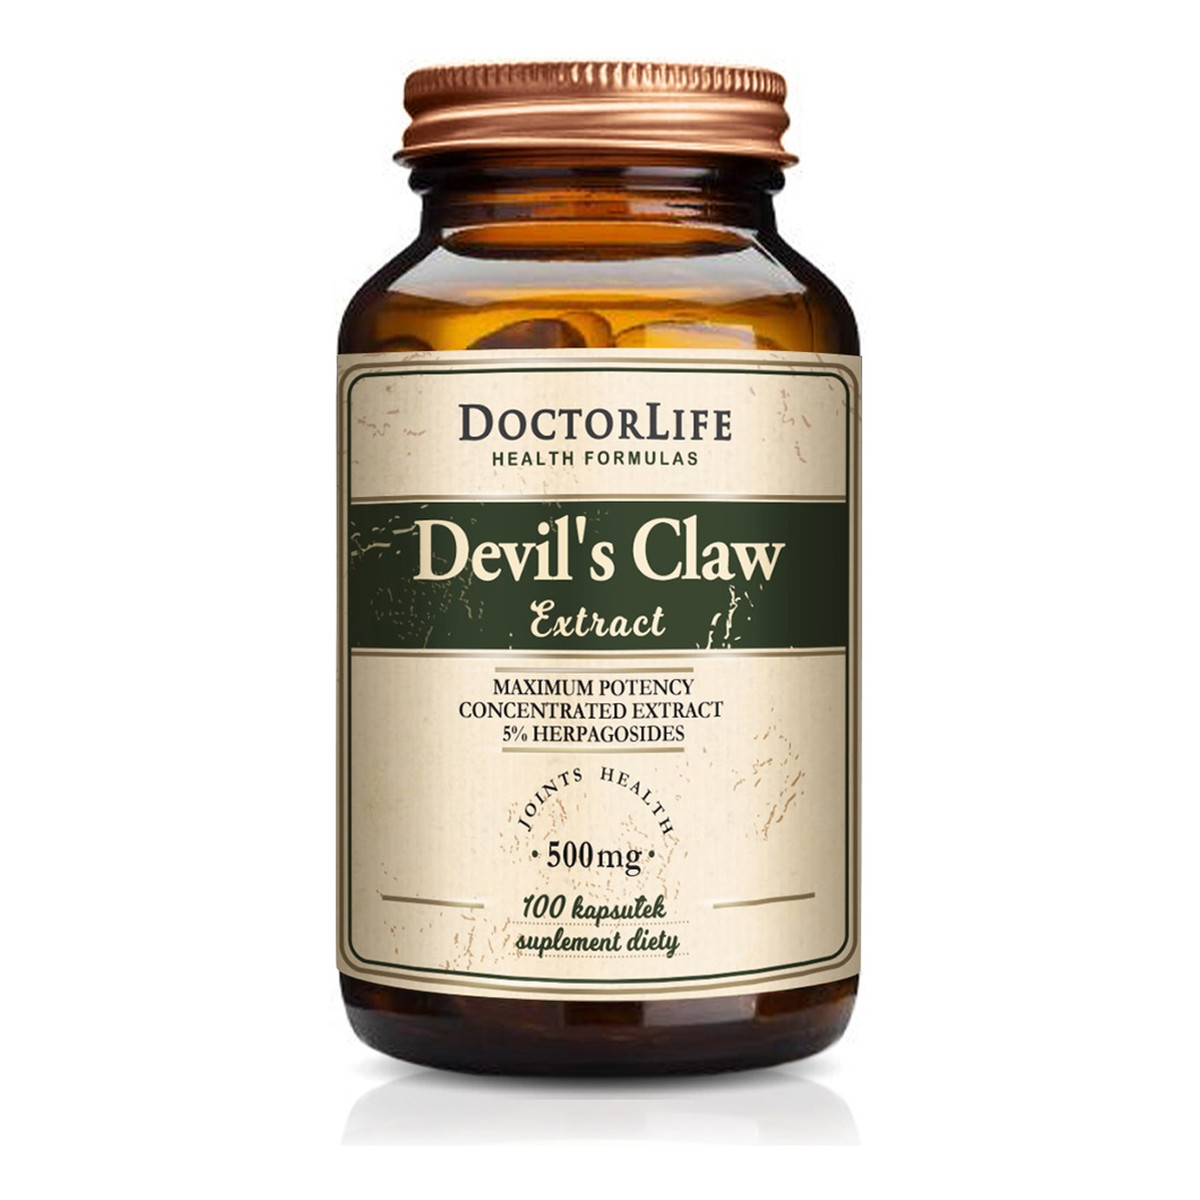 Doctor Life Devil's claw extract diabelski szpon czarci pazur 500mg suplement diety 100 kapsułek